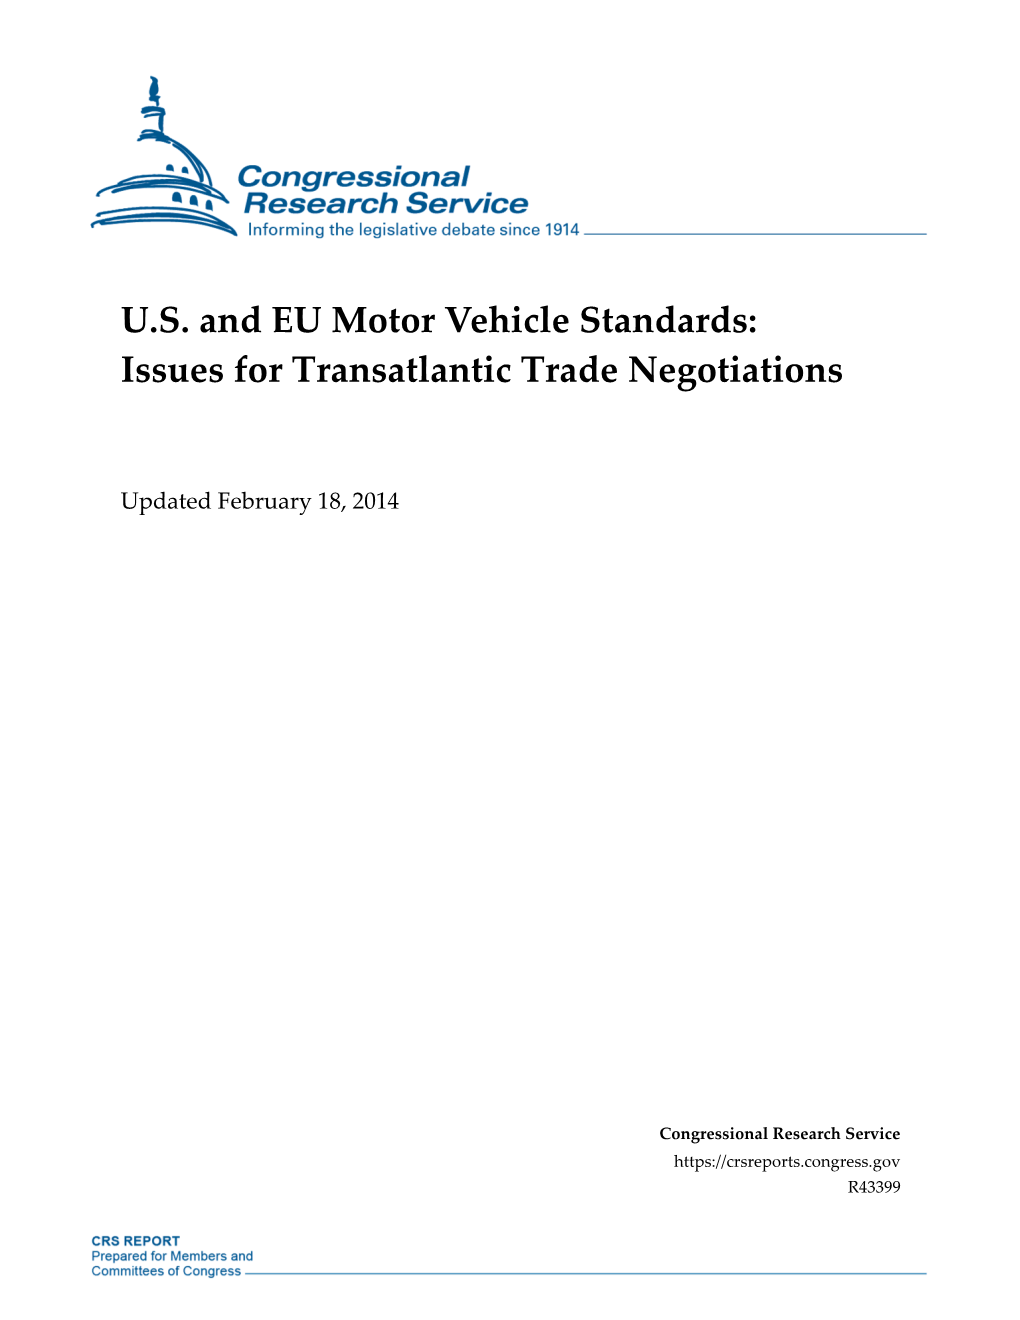 US and EU Motor Vehicle Standards